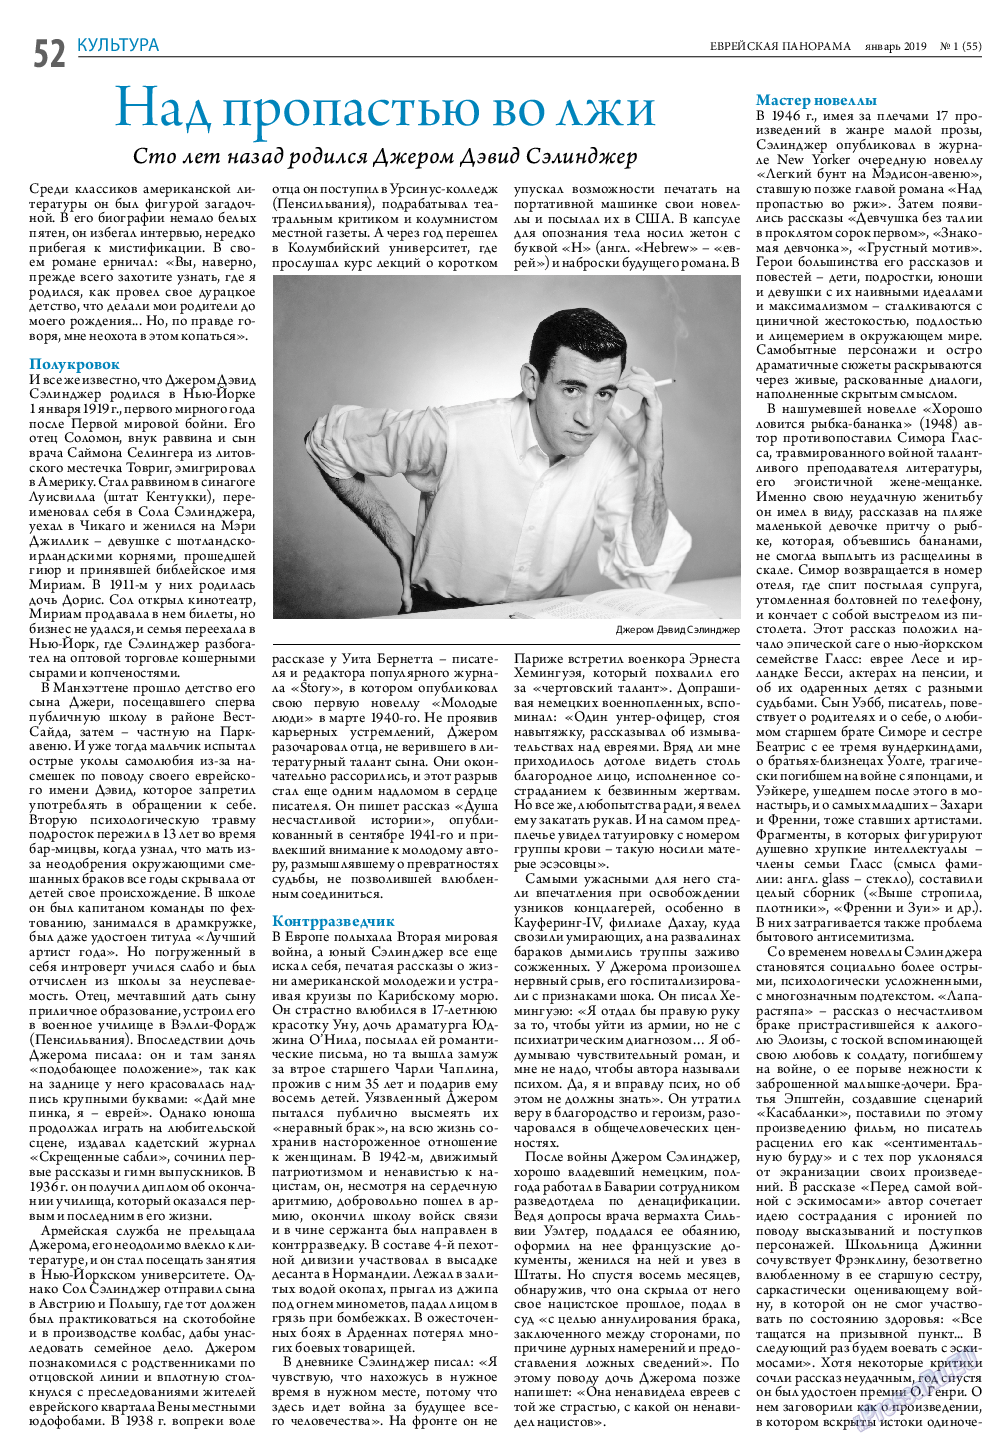 Еврейская панорама, газета. 2019 №1 стр.52